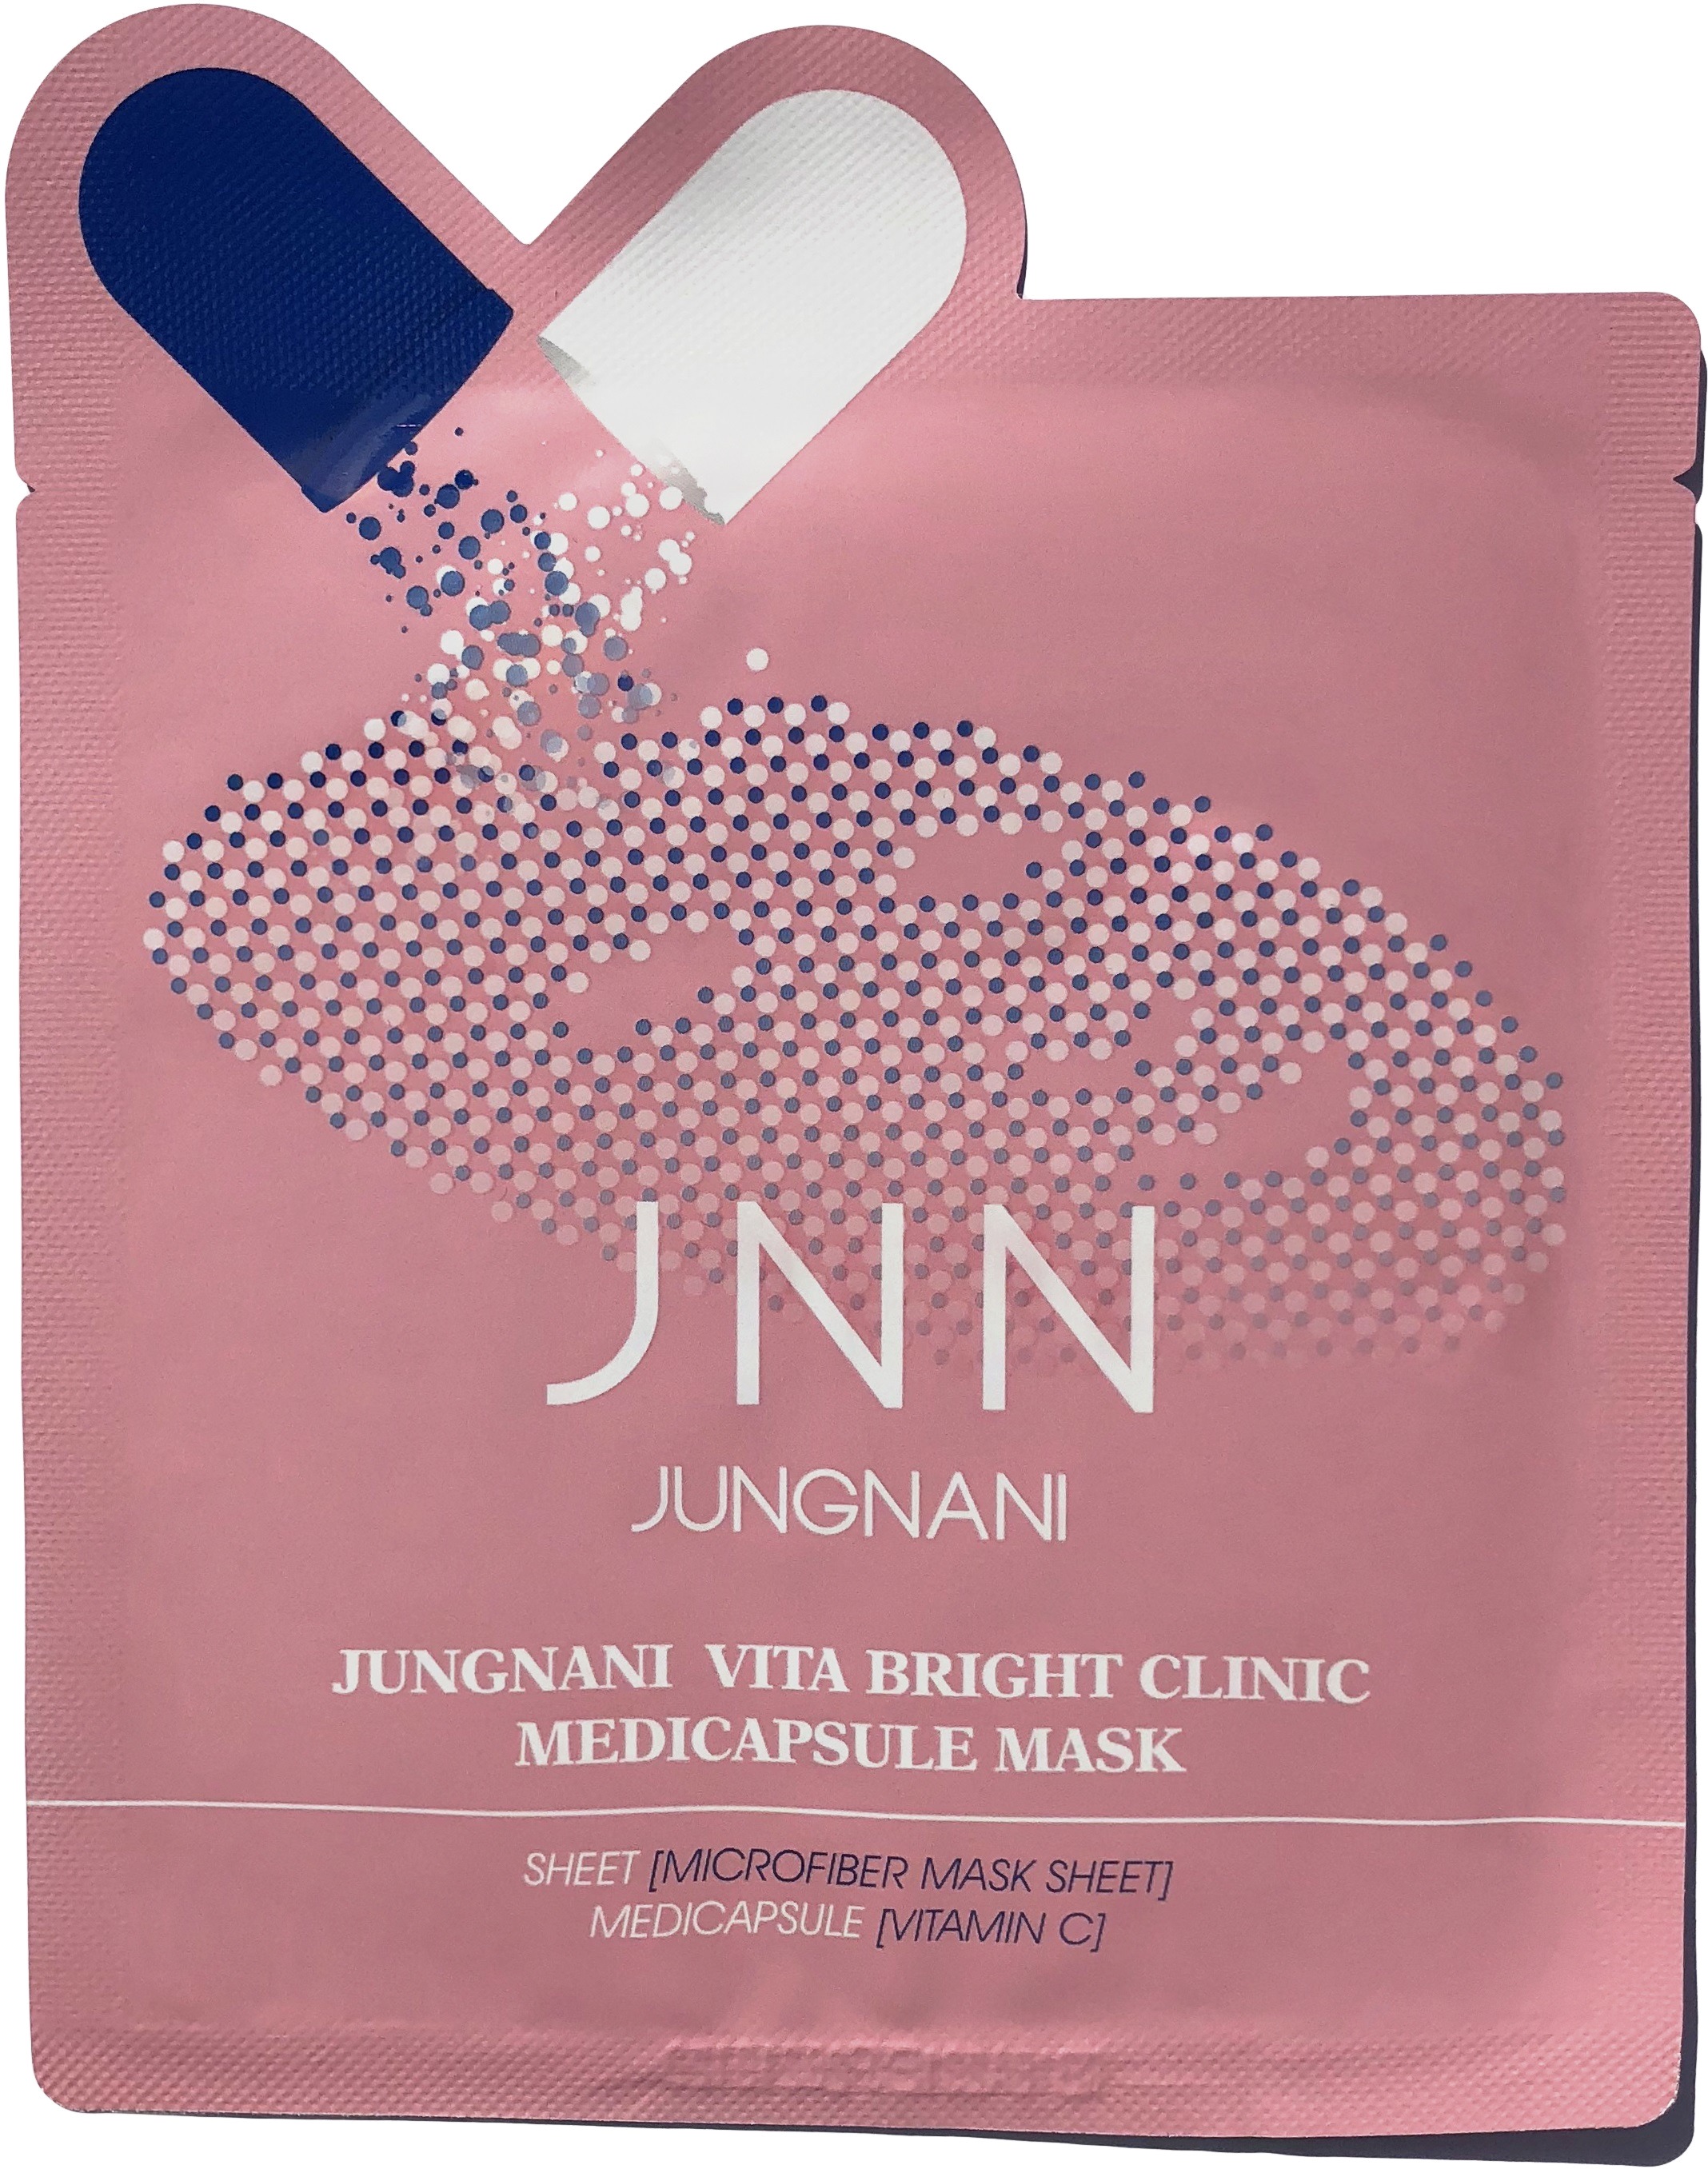 Jungnani Jnn Vita Bright Clinic Medicapsule Mask